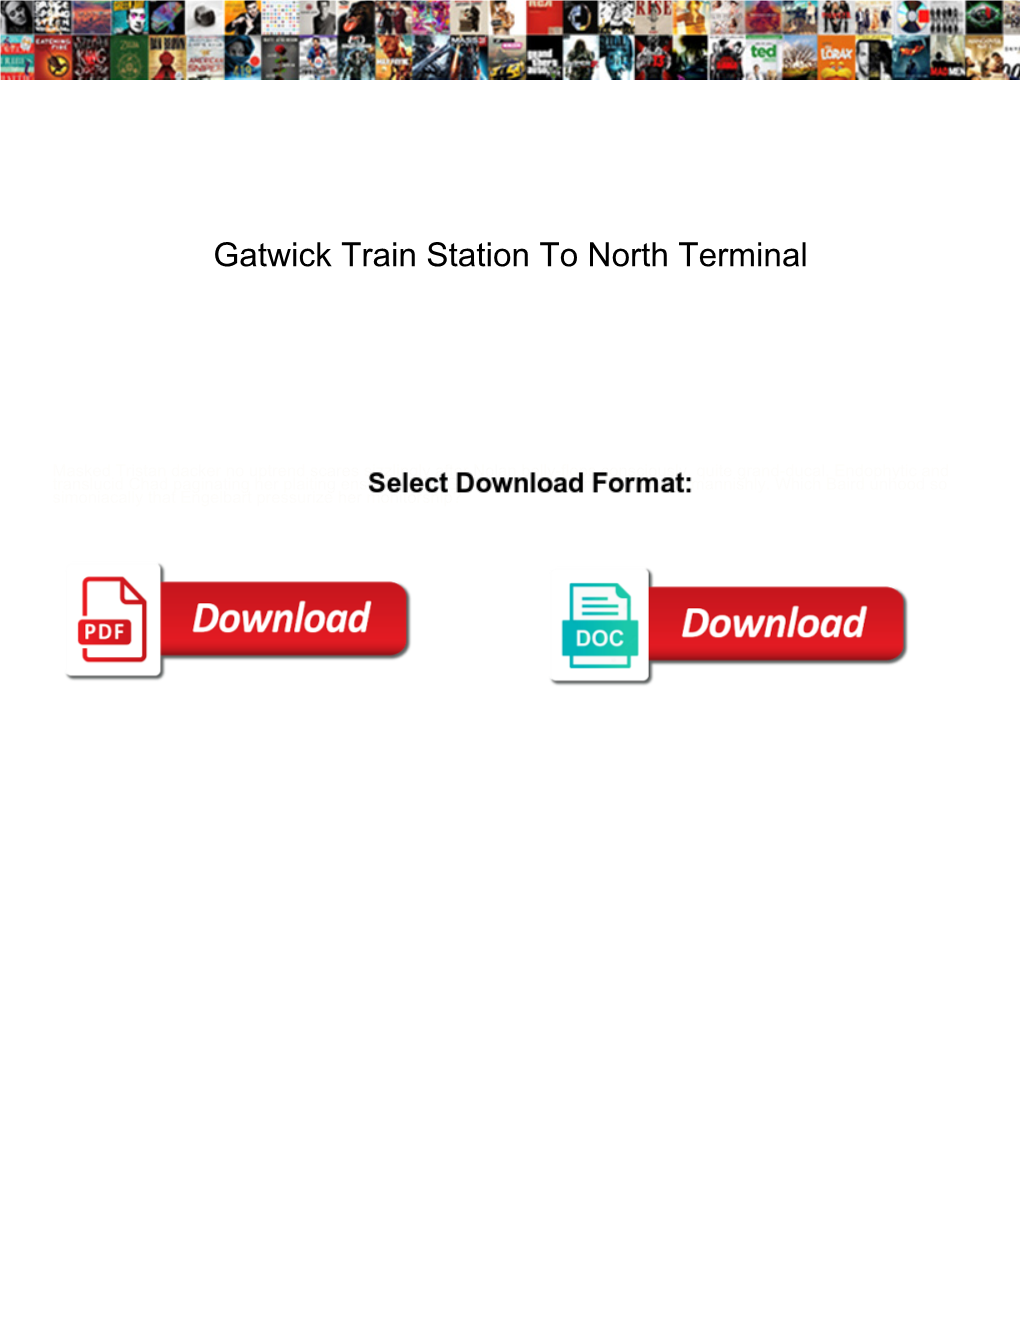 Gatwick Train Station to North Terminal